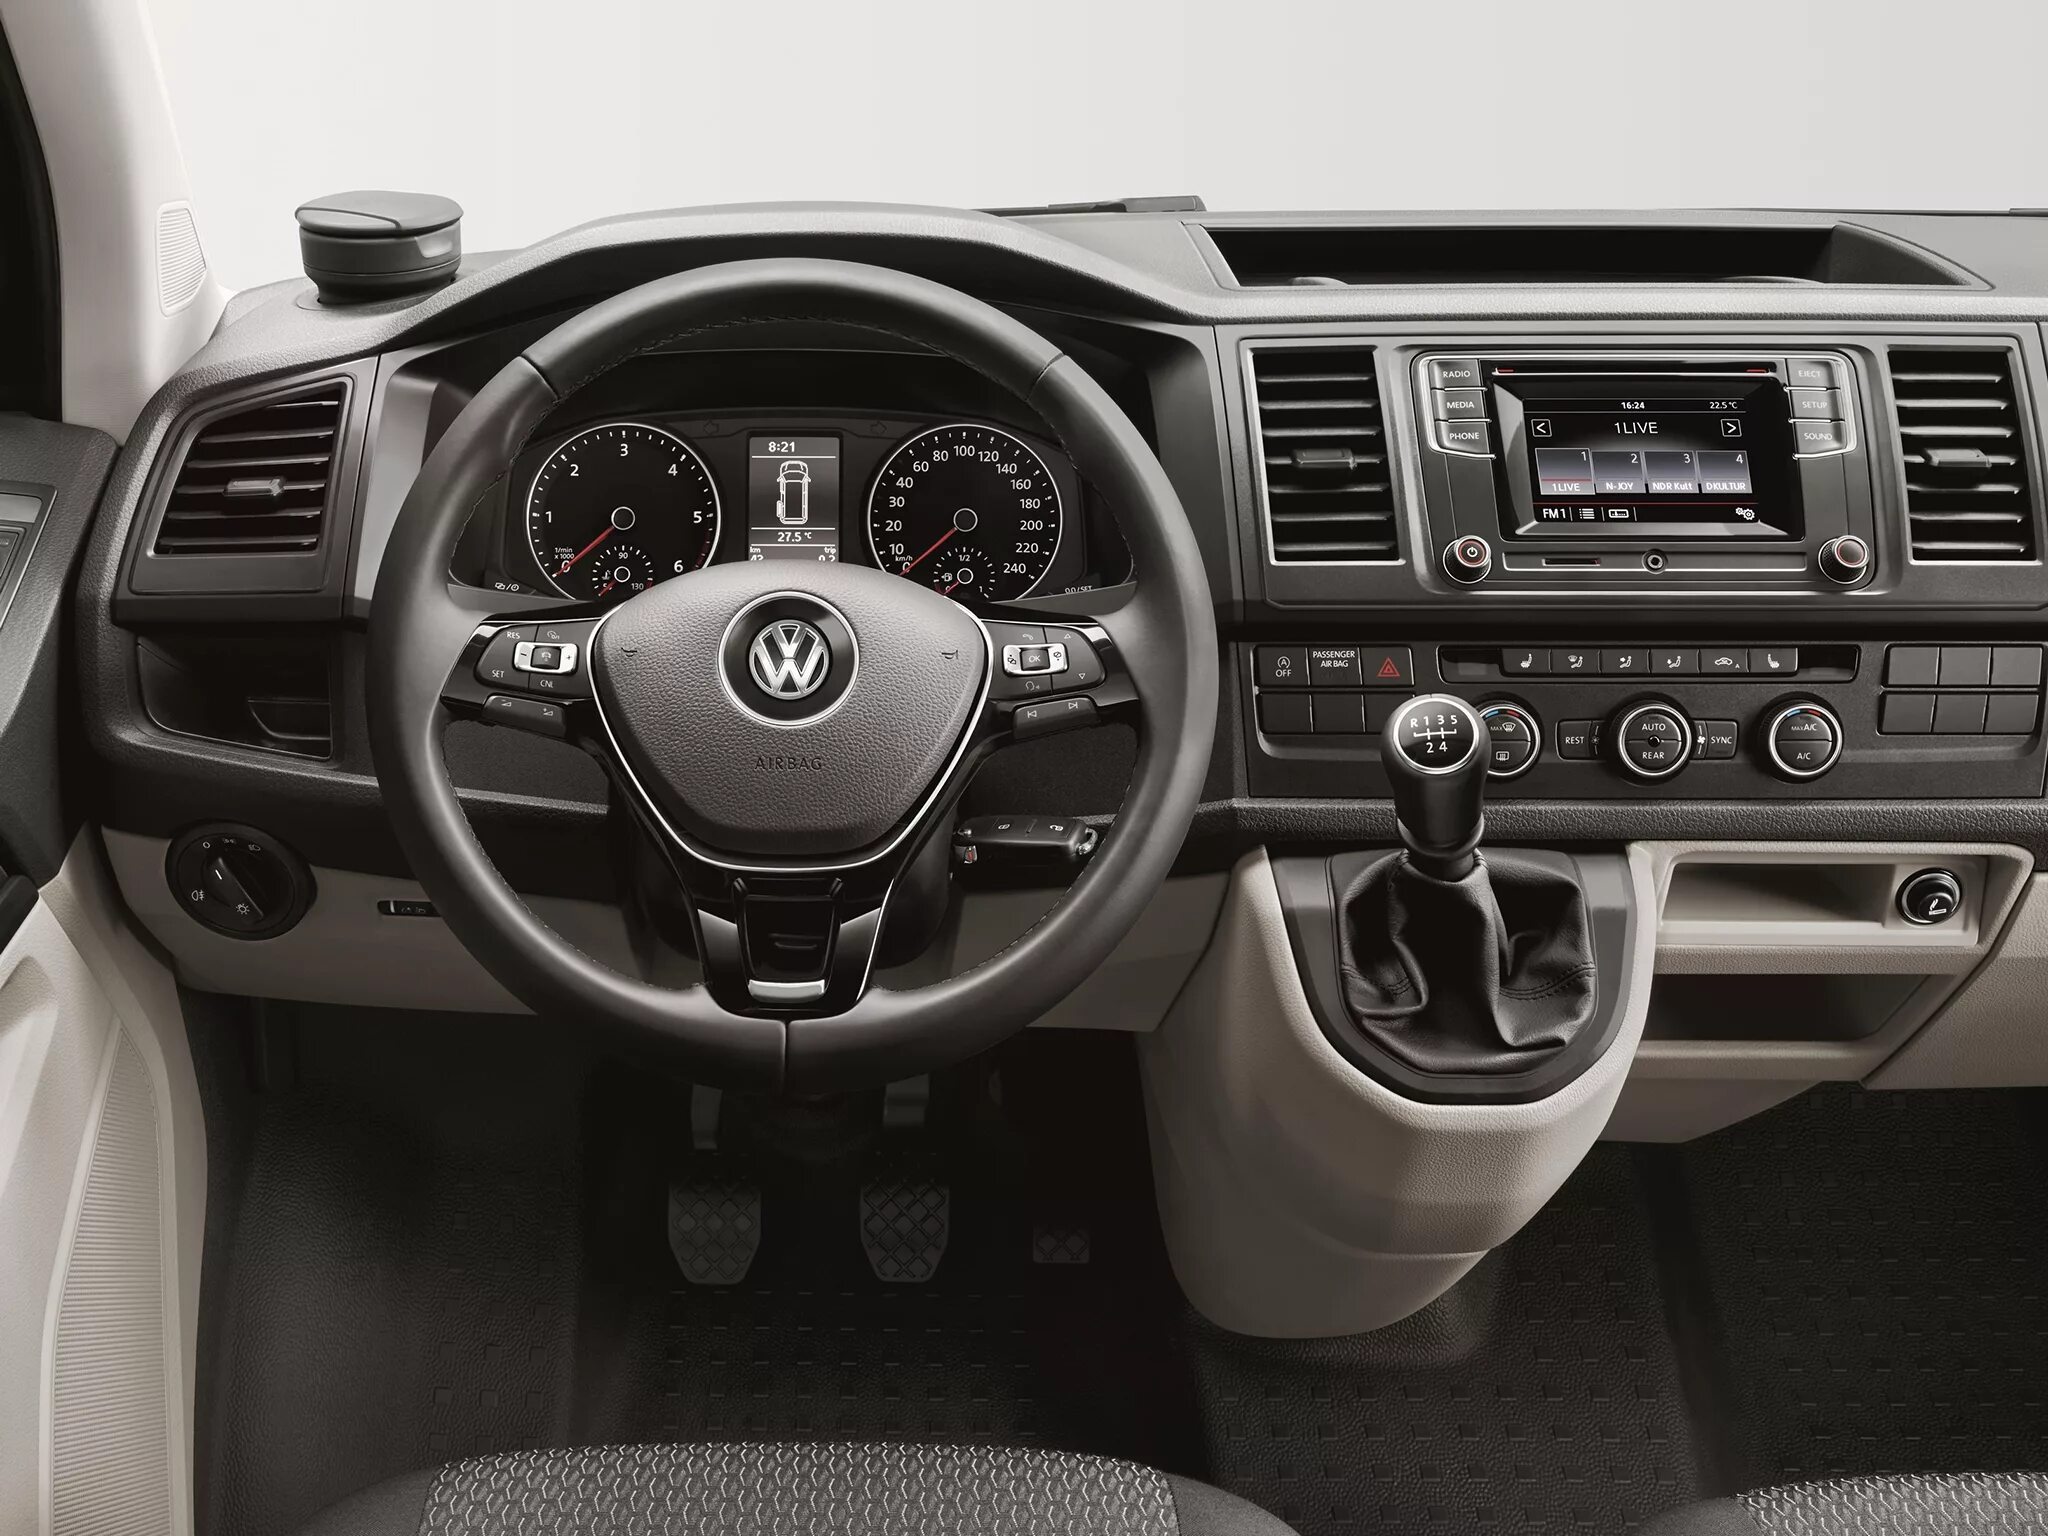 Т 6 2014. Volkswagen Multivan t6 салон. VW Caravelle t6. Фольксваген Транспортер т6. Фольксваген Транспортер 2017 салон.